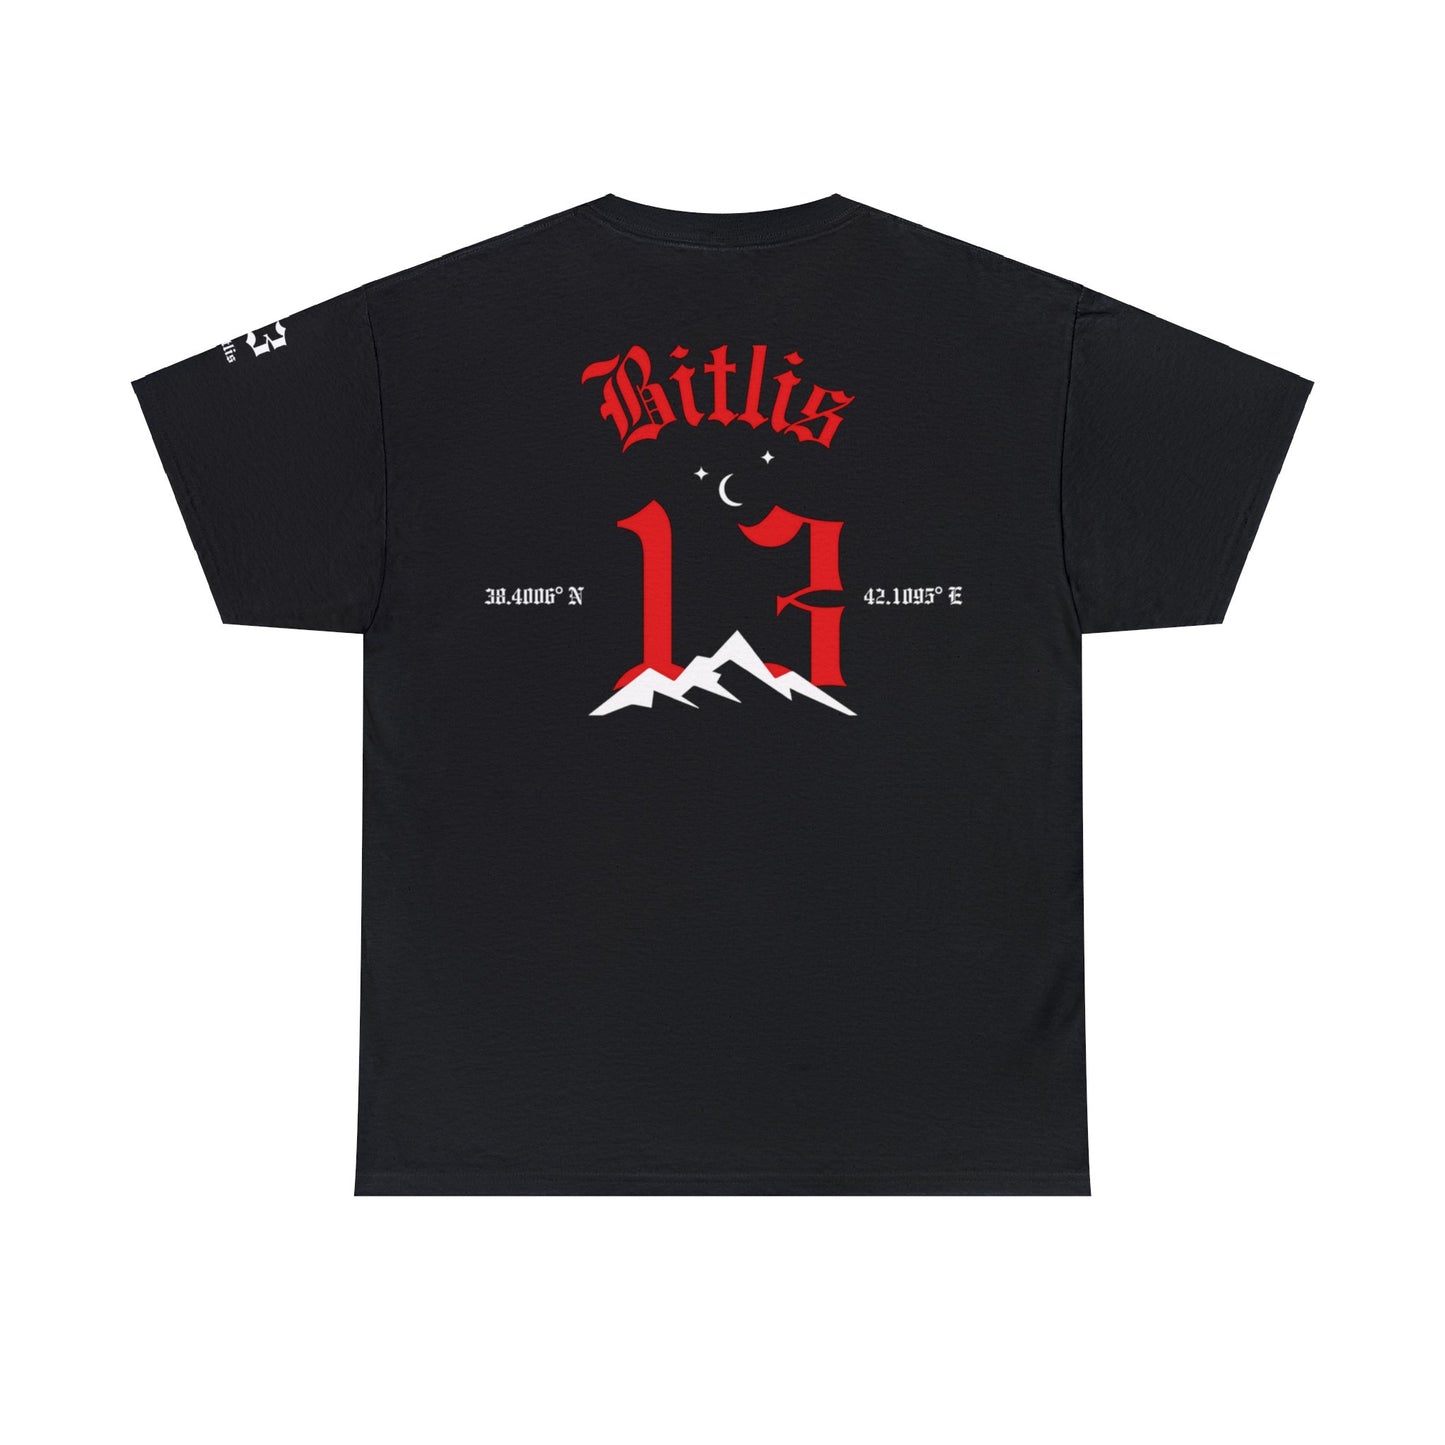 Şehirim - 13 Bitlis - T-Shirt - Back Print - Black